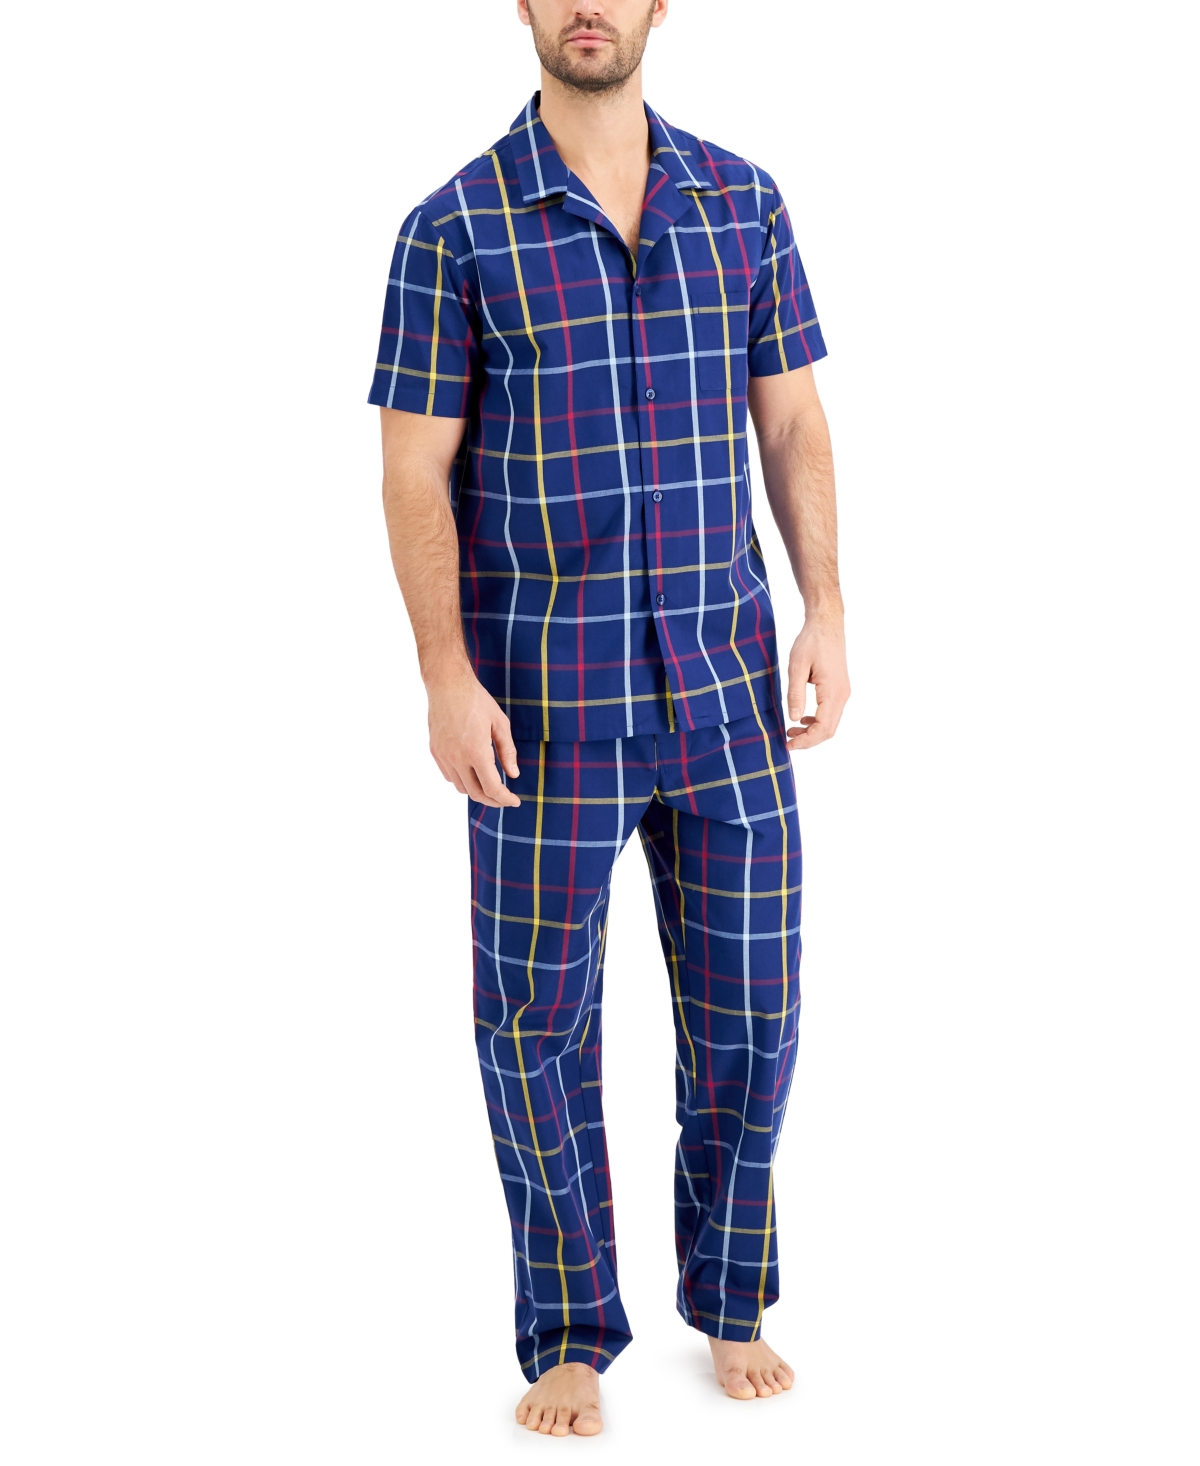 Men's Plaid Pajama Set, Created for Macy's - Navy